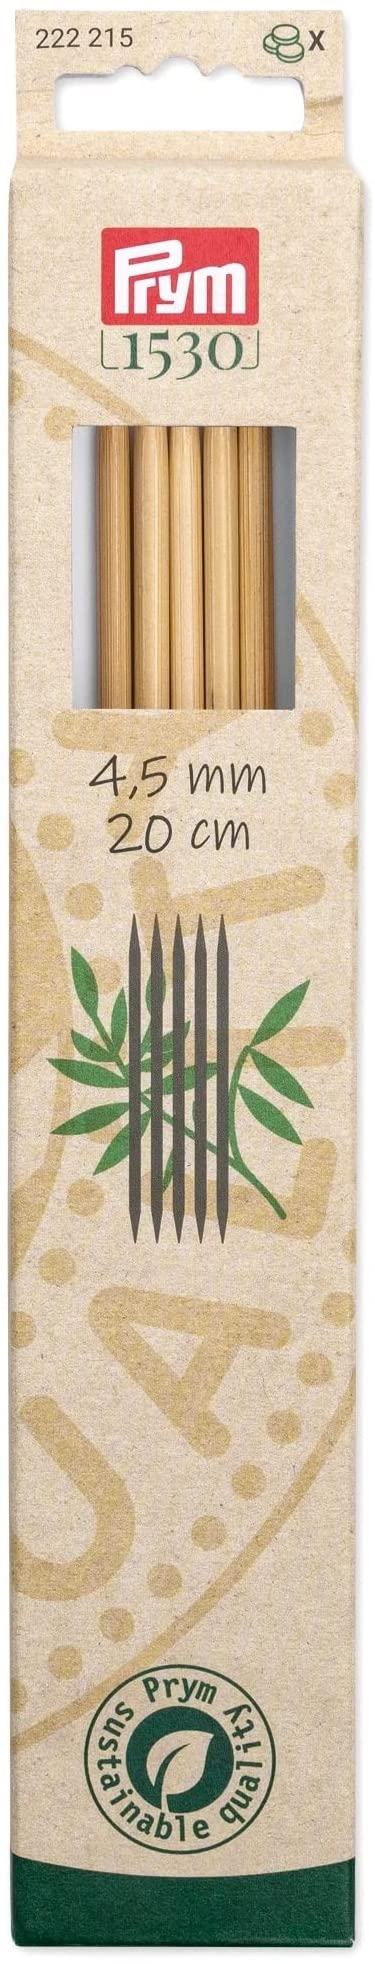 Strumpfstricknadeln Bambus 4,50 20 cm Prym 222215